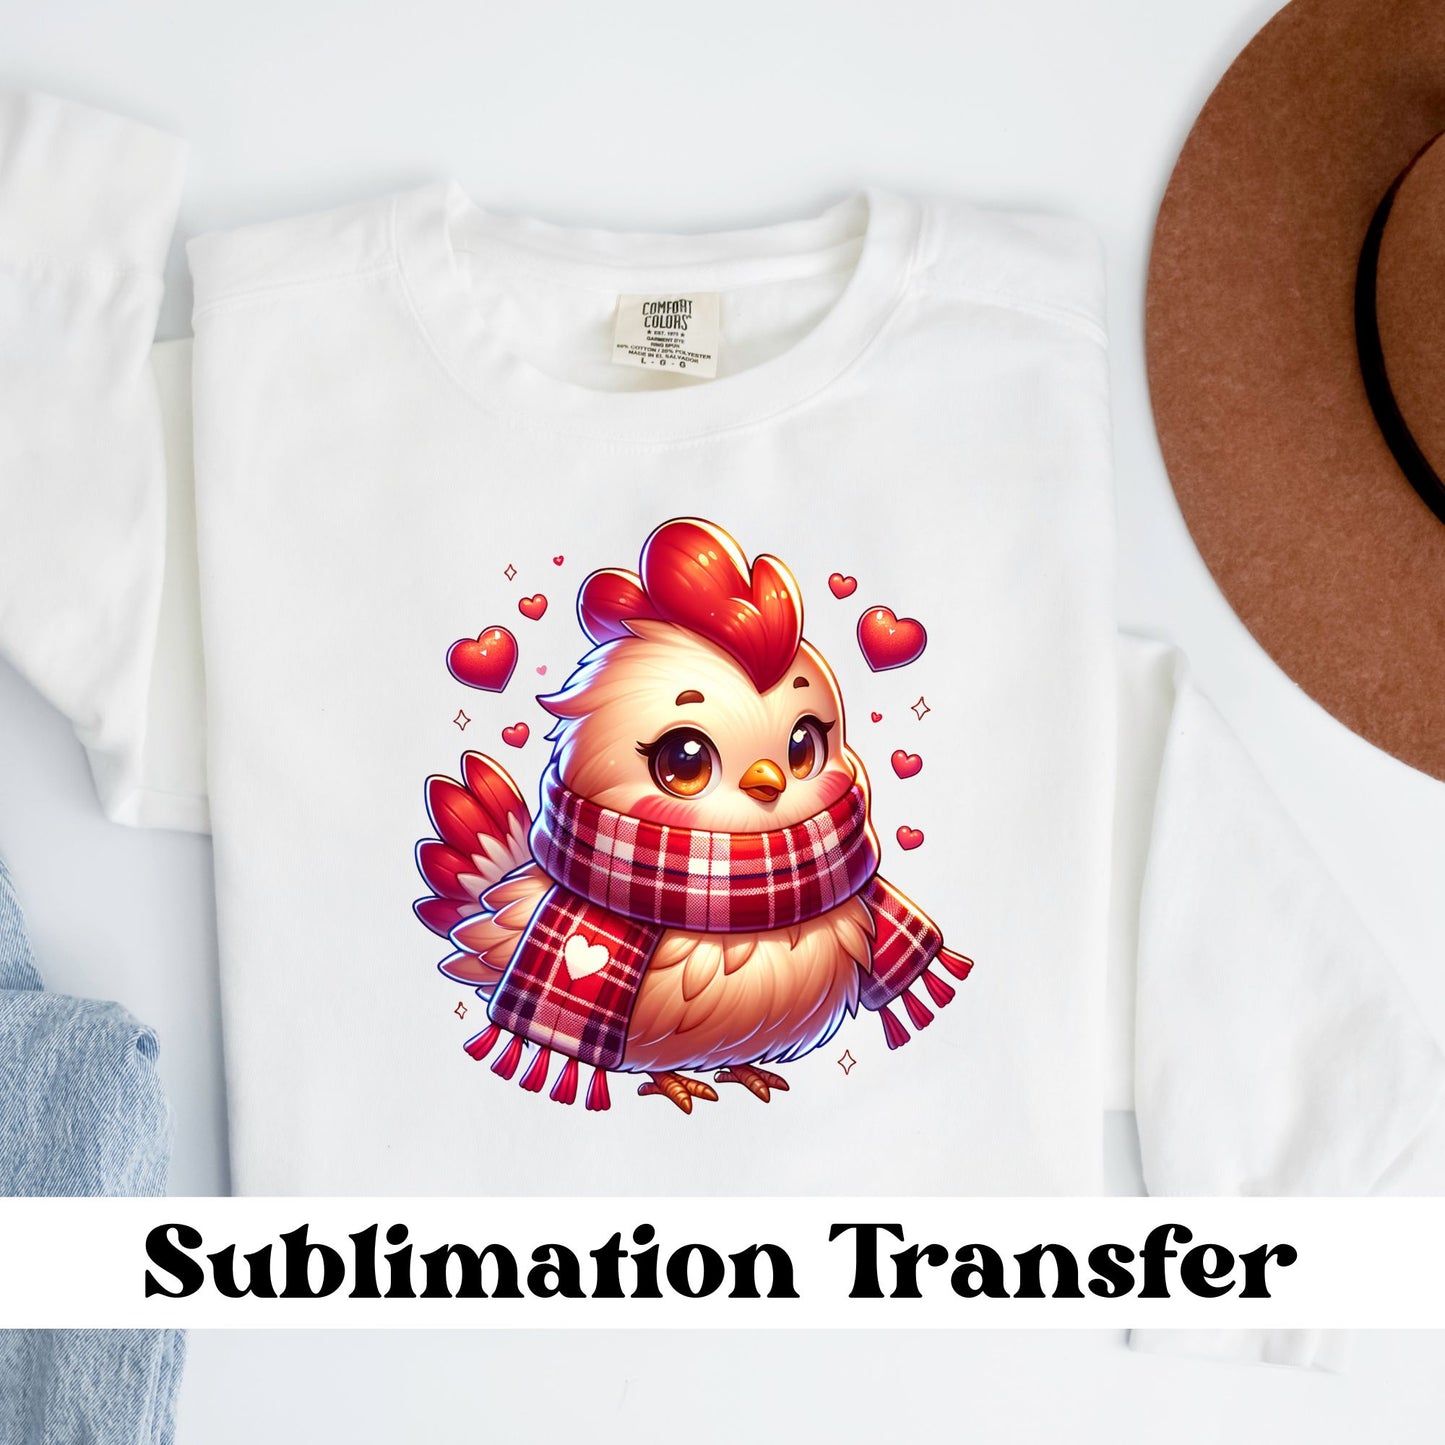 I Love You Sublimation Transfer